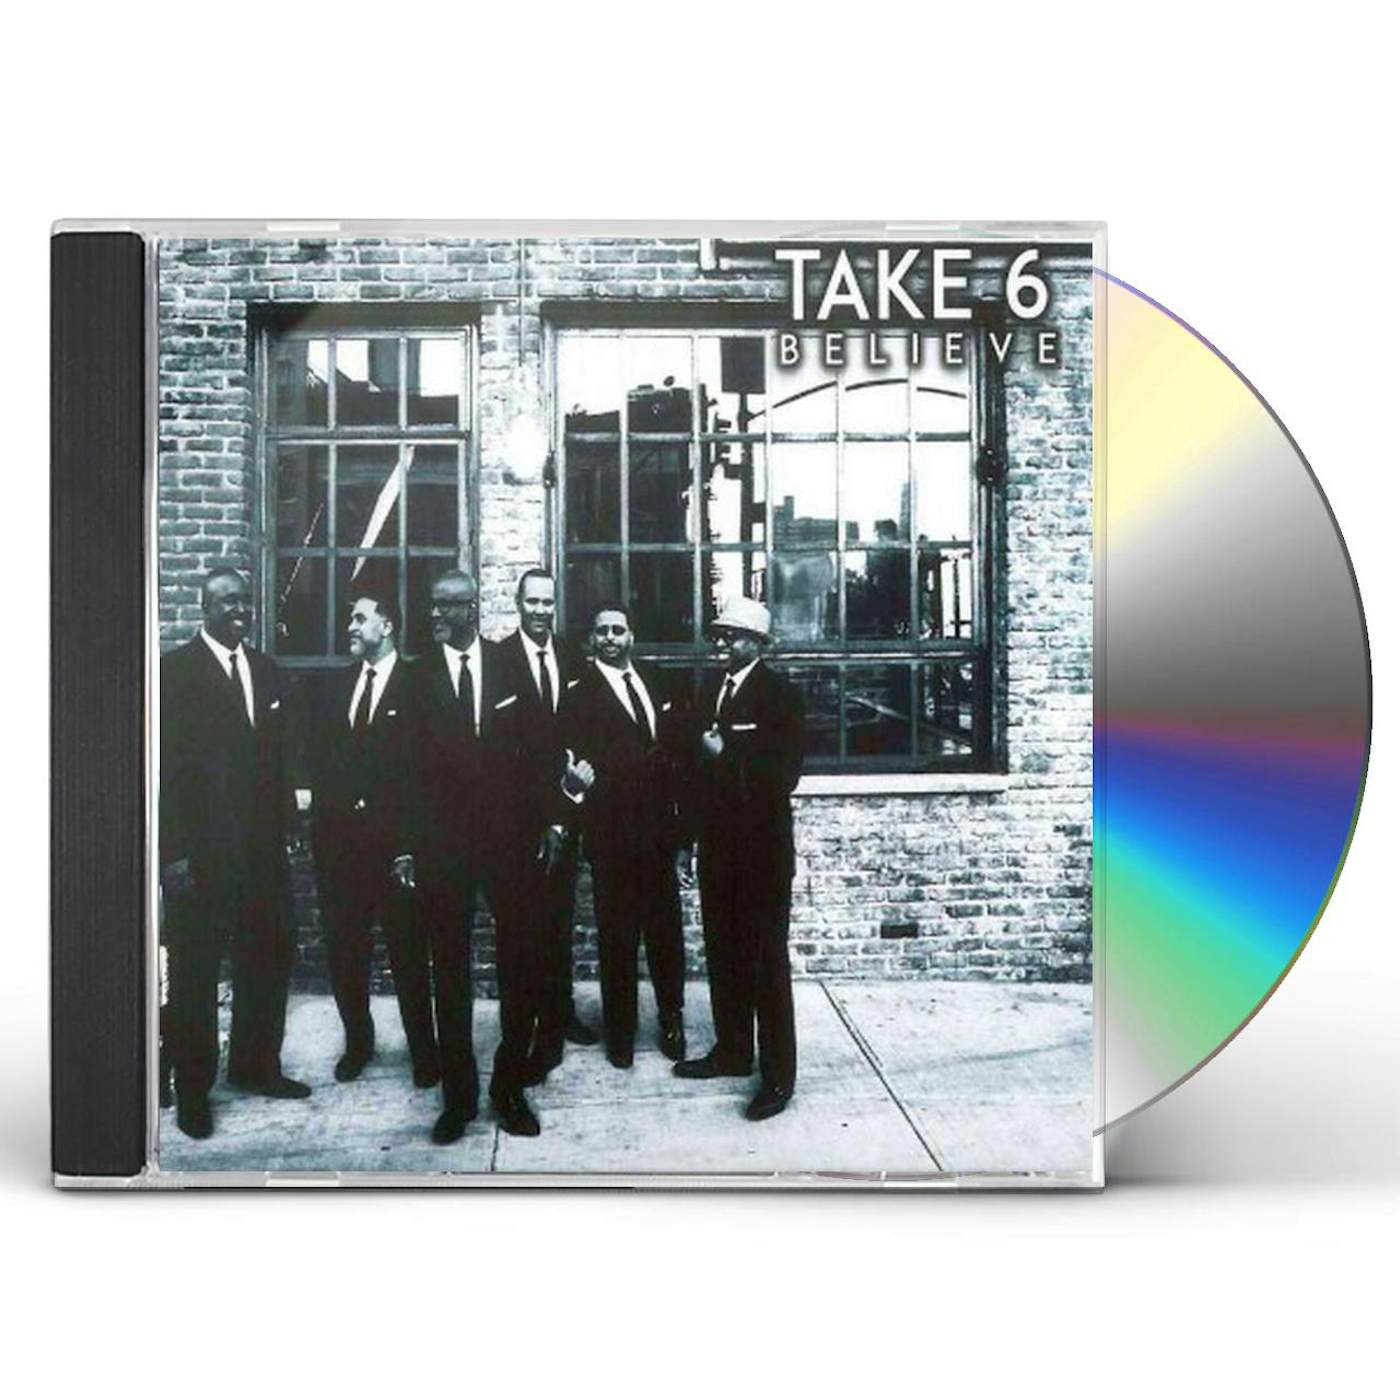 Take 6 BELIEVE CD